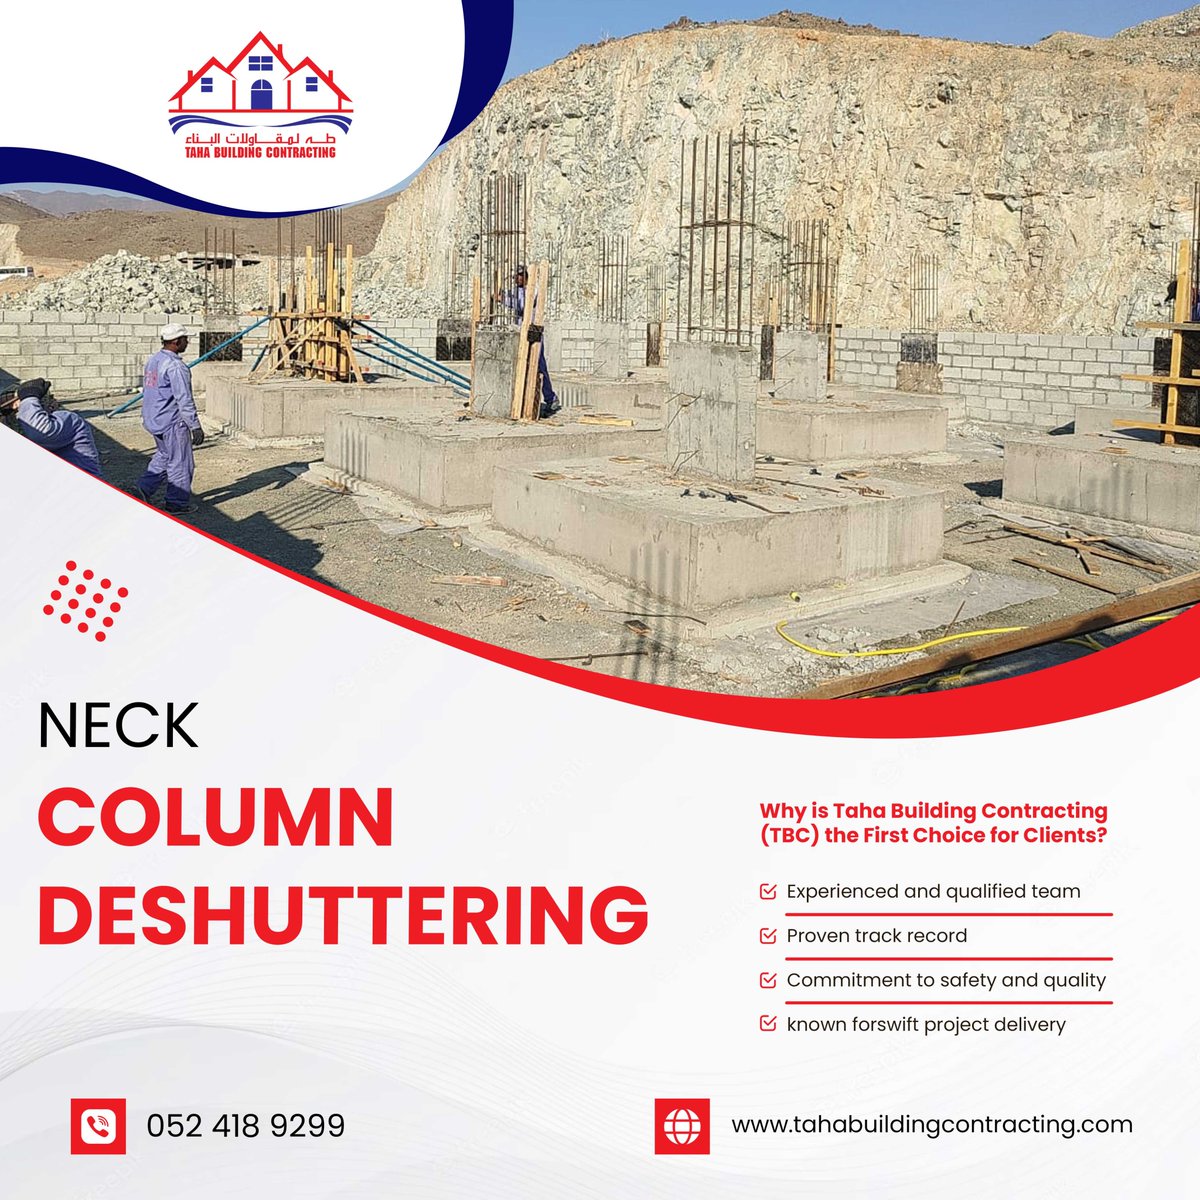 Neck Column DE Shuttering!

#neckcolumndeshuttering #neckcolumnformwork #concreteconstruction #constructionsafety #constructiontips #constructionsafety #constructiontips #constructionnews #uae #abudhabi #dubai #sharjah #ajman #fujairah #kalba #tahabuildingcontracting